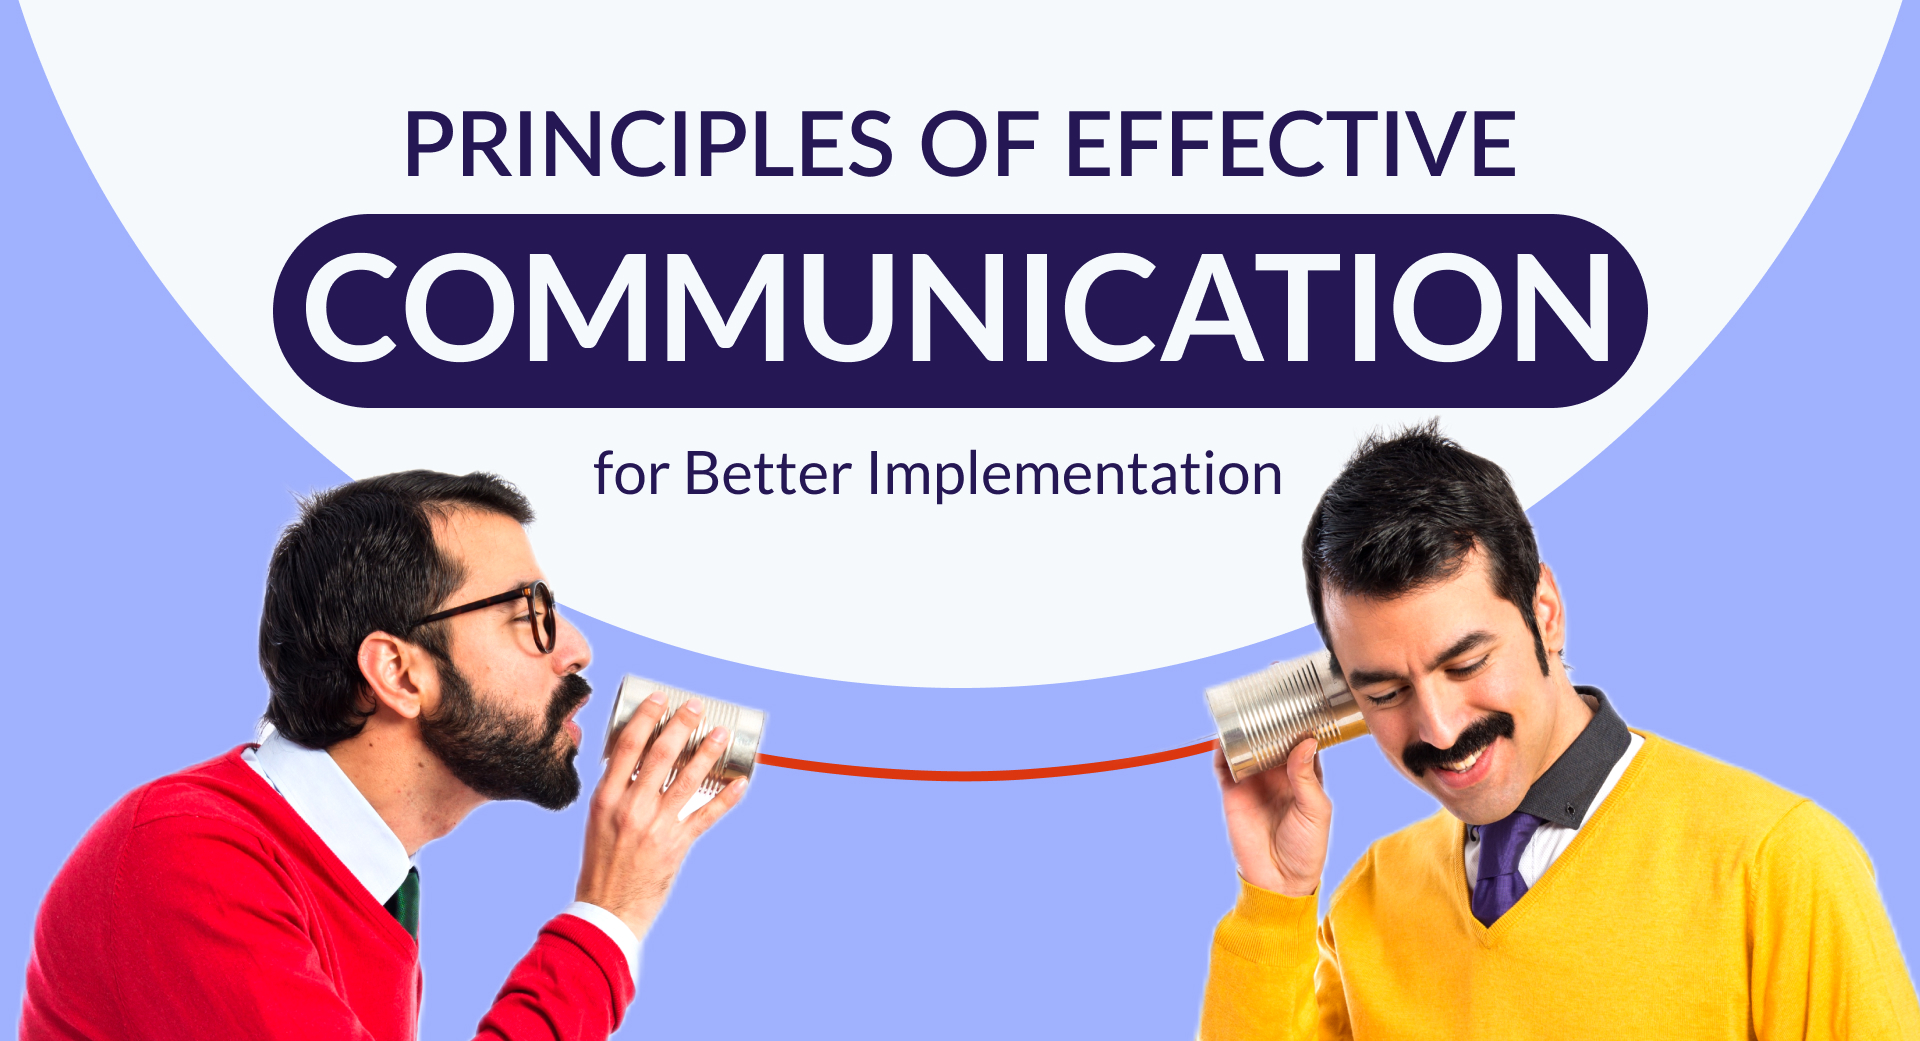 Principles of Effective Communication for Better Implementation